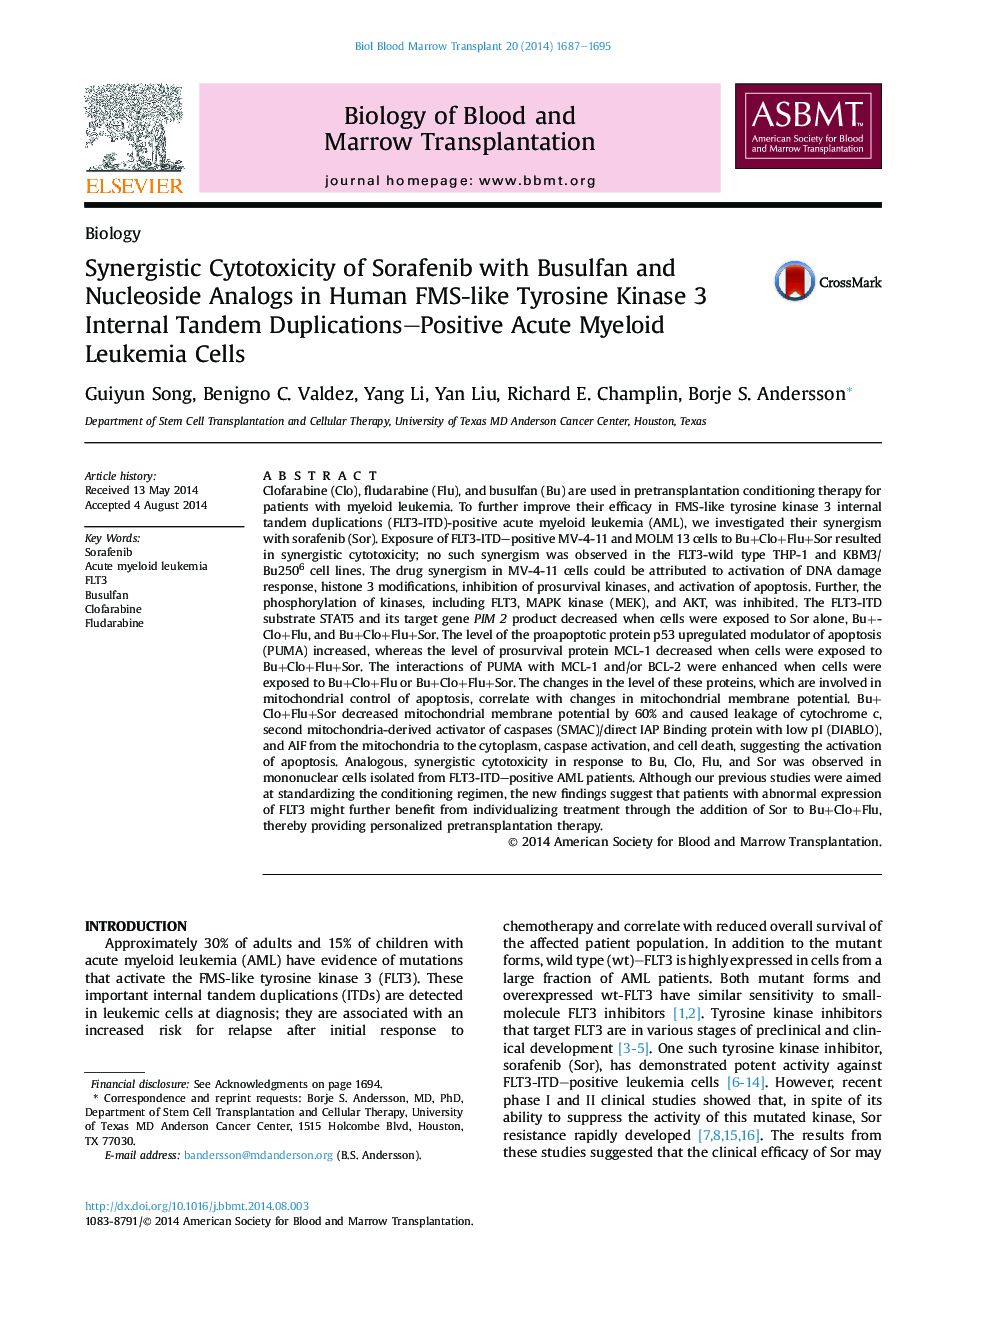 Synergistic Cytotoxicity of Sorafenib with Busulfan and Nucleoside Analogs in Human FMS-like Tyrosine Kinase 3 Internal Tandem Duplications–Positive Acute Myeloid Leukemia Cells 